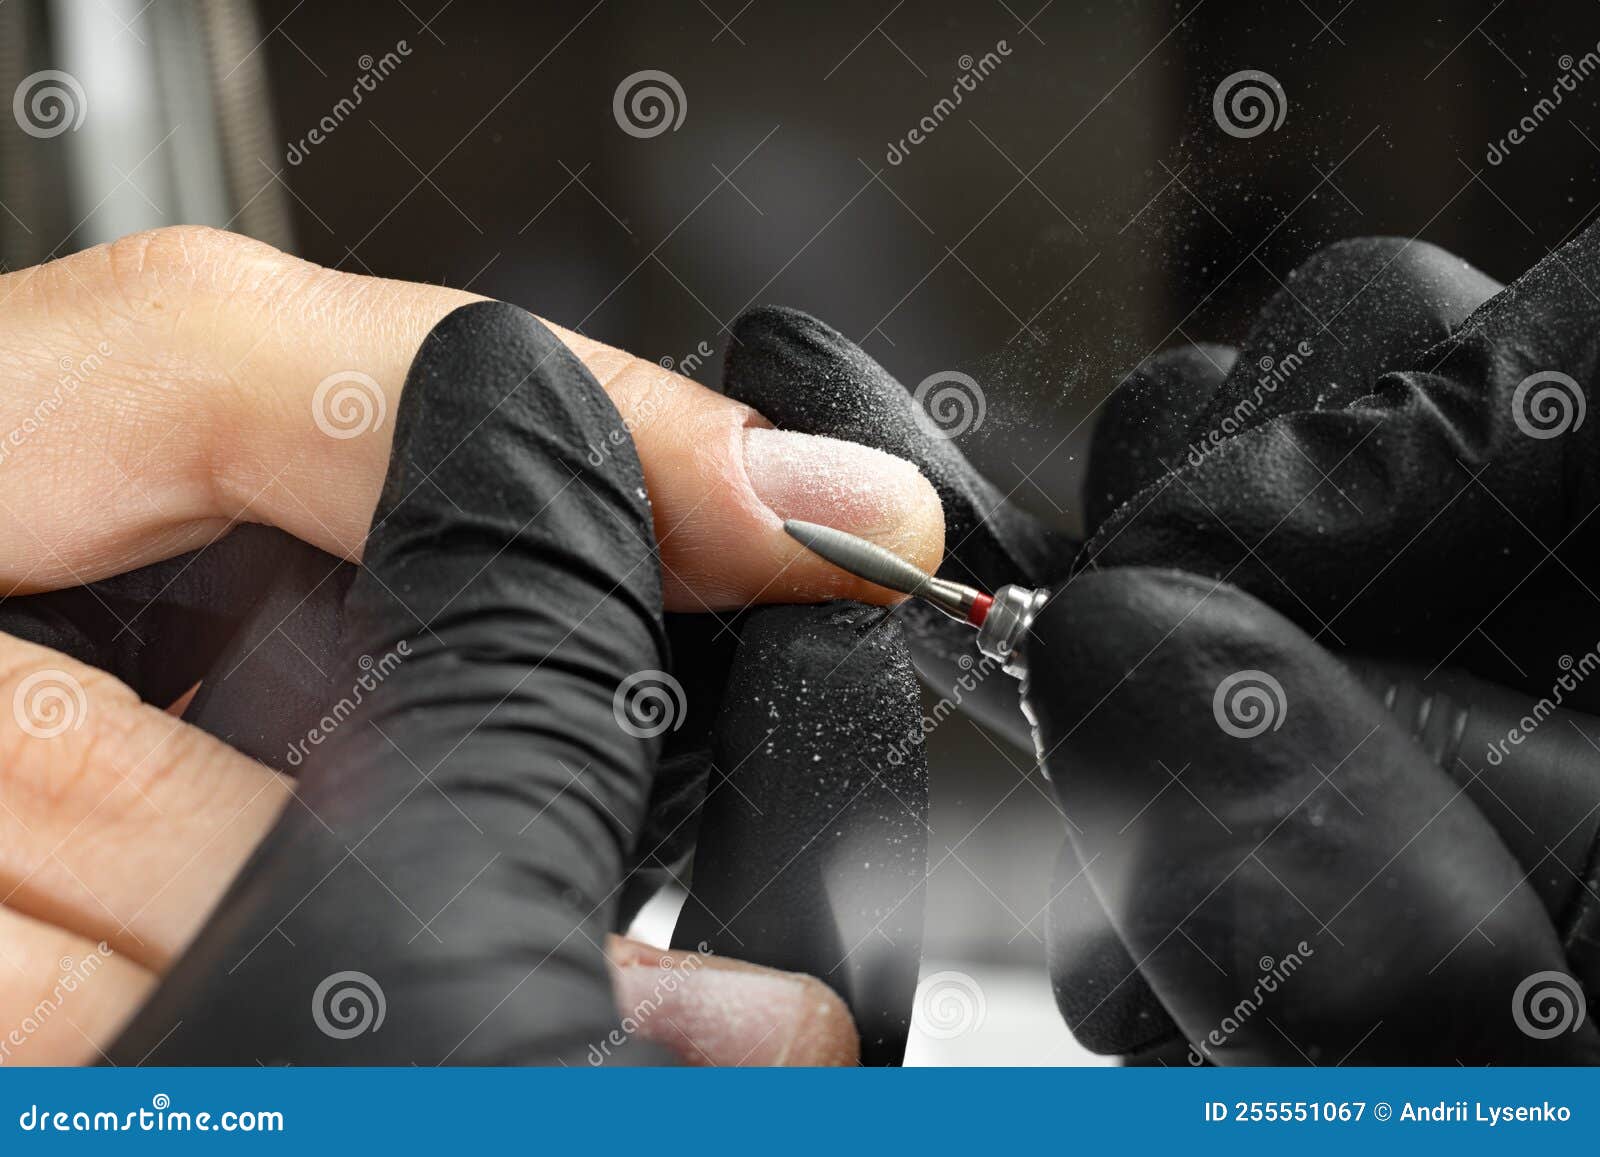 JEWHITENY Professional Nail Drill Machine 30,000RPM, Light Electric Acrylic Nail  File Kits for Remove Nail Gel Polish, Manicure Machine Design for Home  Salon Use, 110-240V(Black) : Amazon.in: Beauty